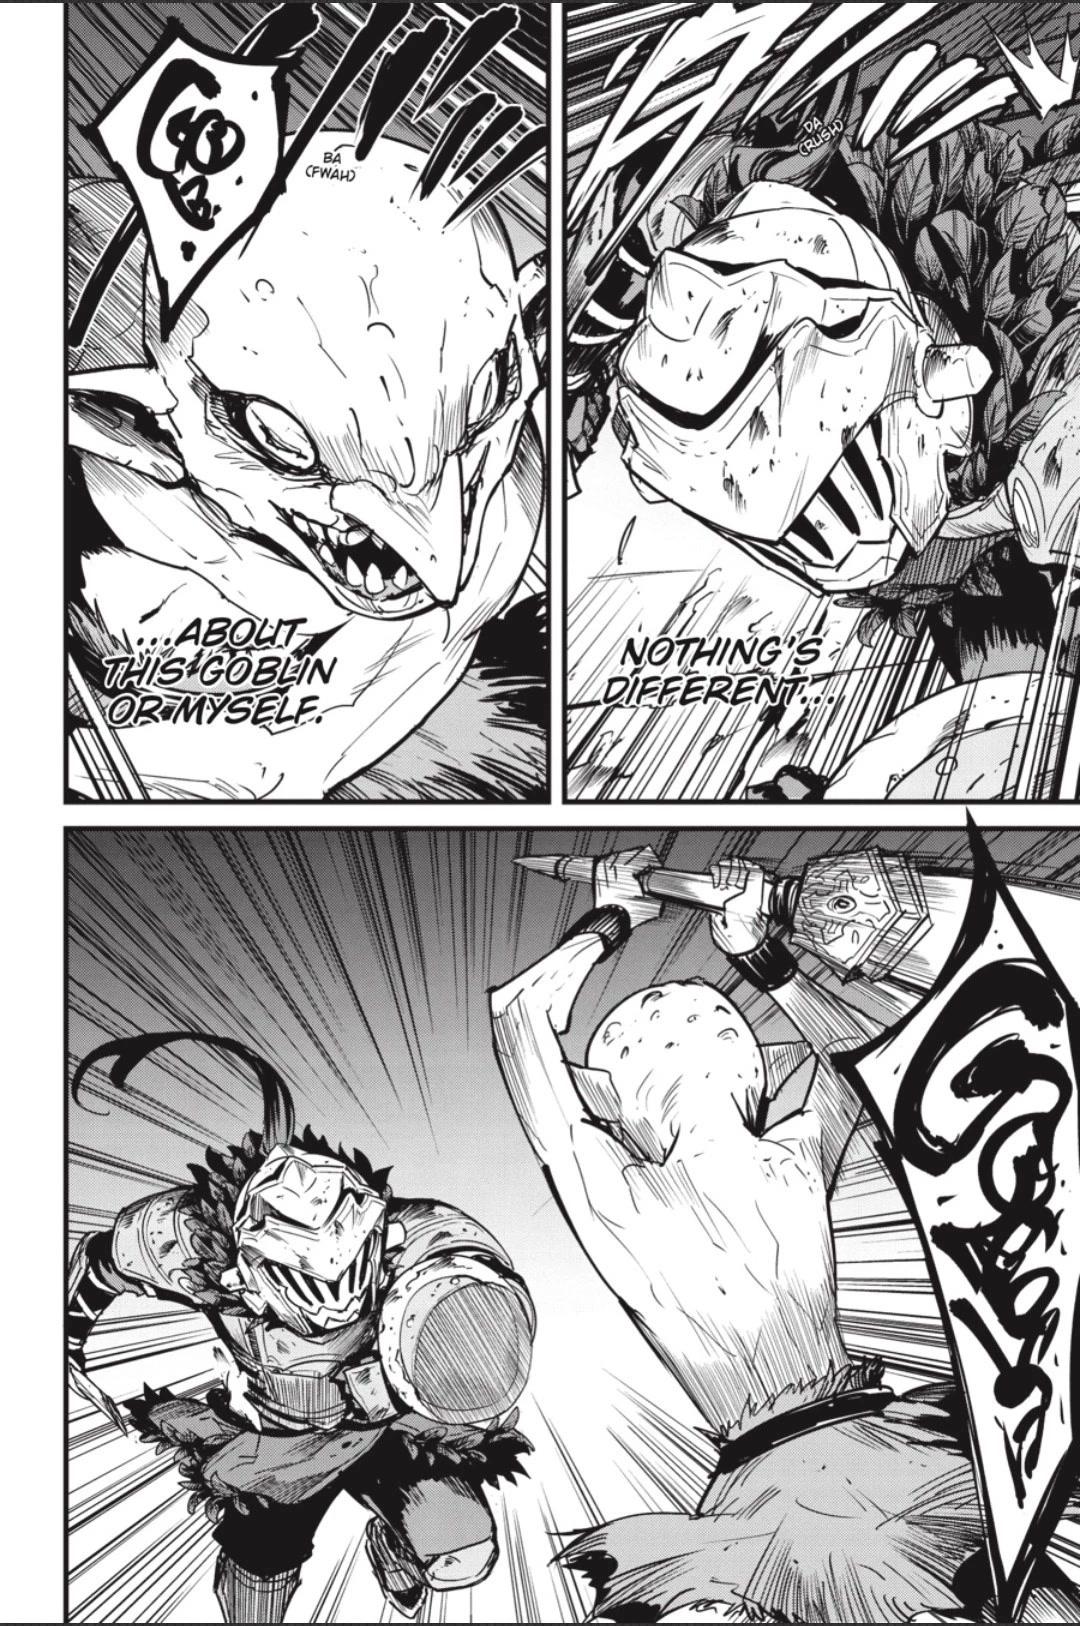 Goblin Slayer Side Story Year One Manga Volume 9